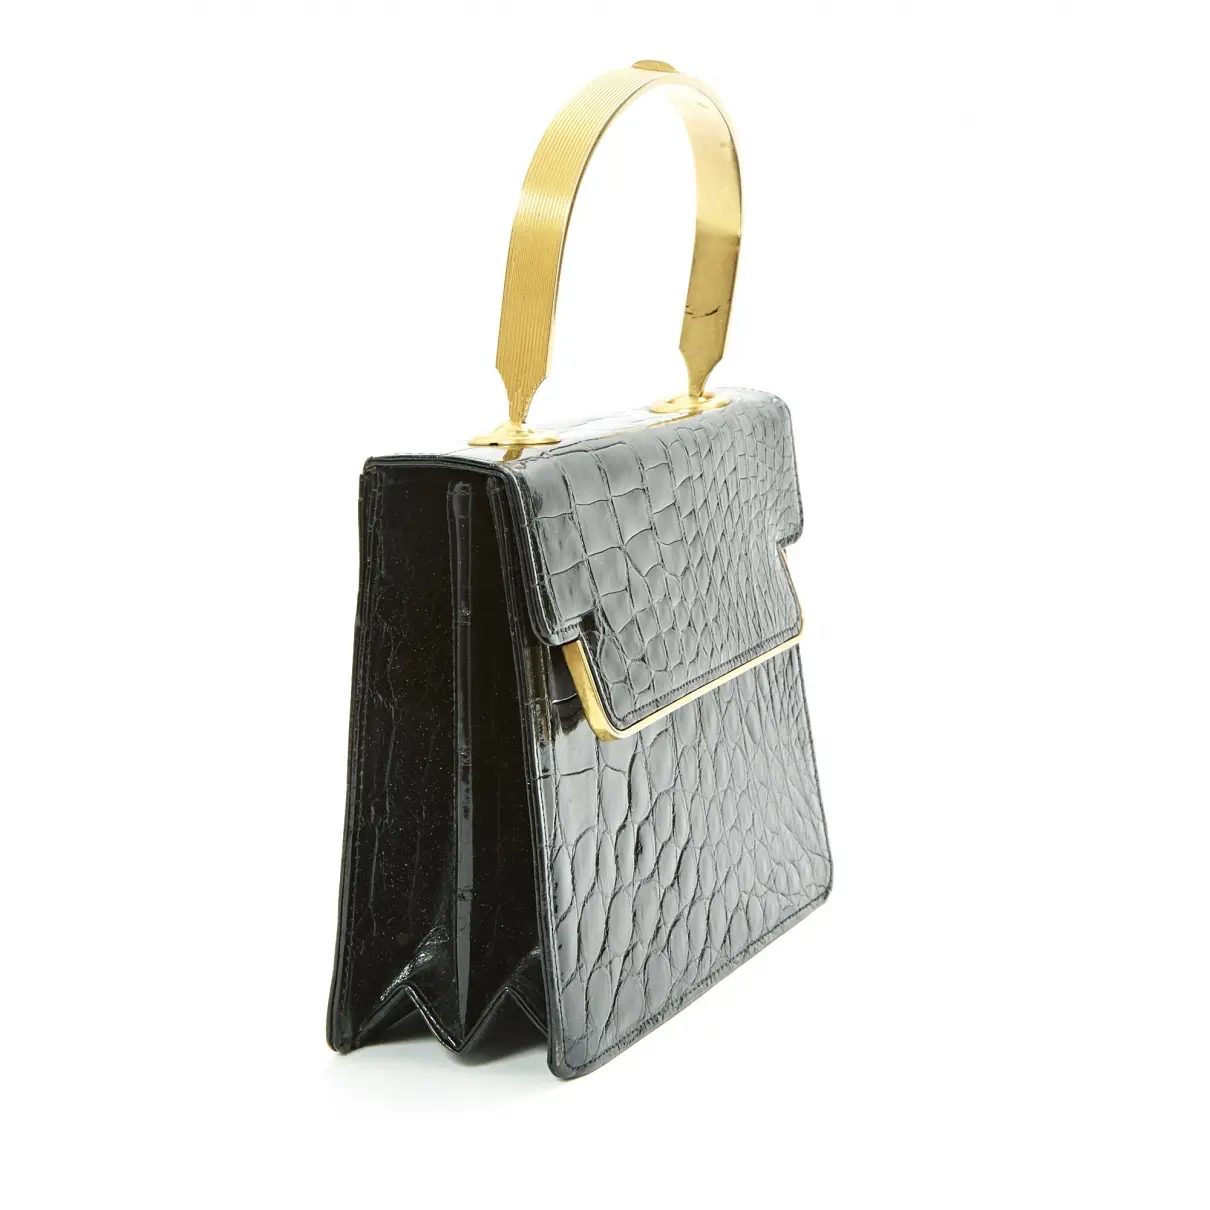 Saks Fifth Avenue Collection Crocodile handbag for sale - Vintage